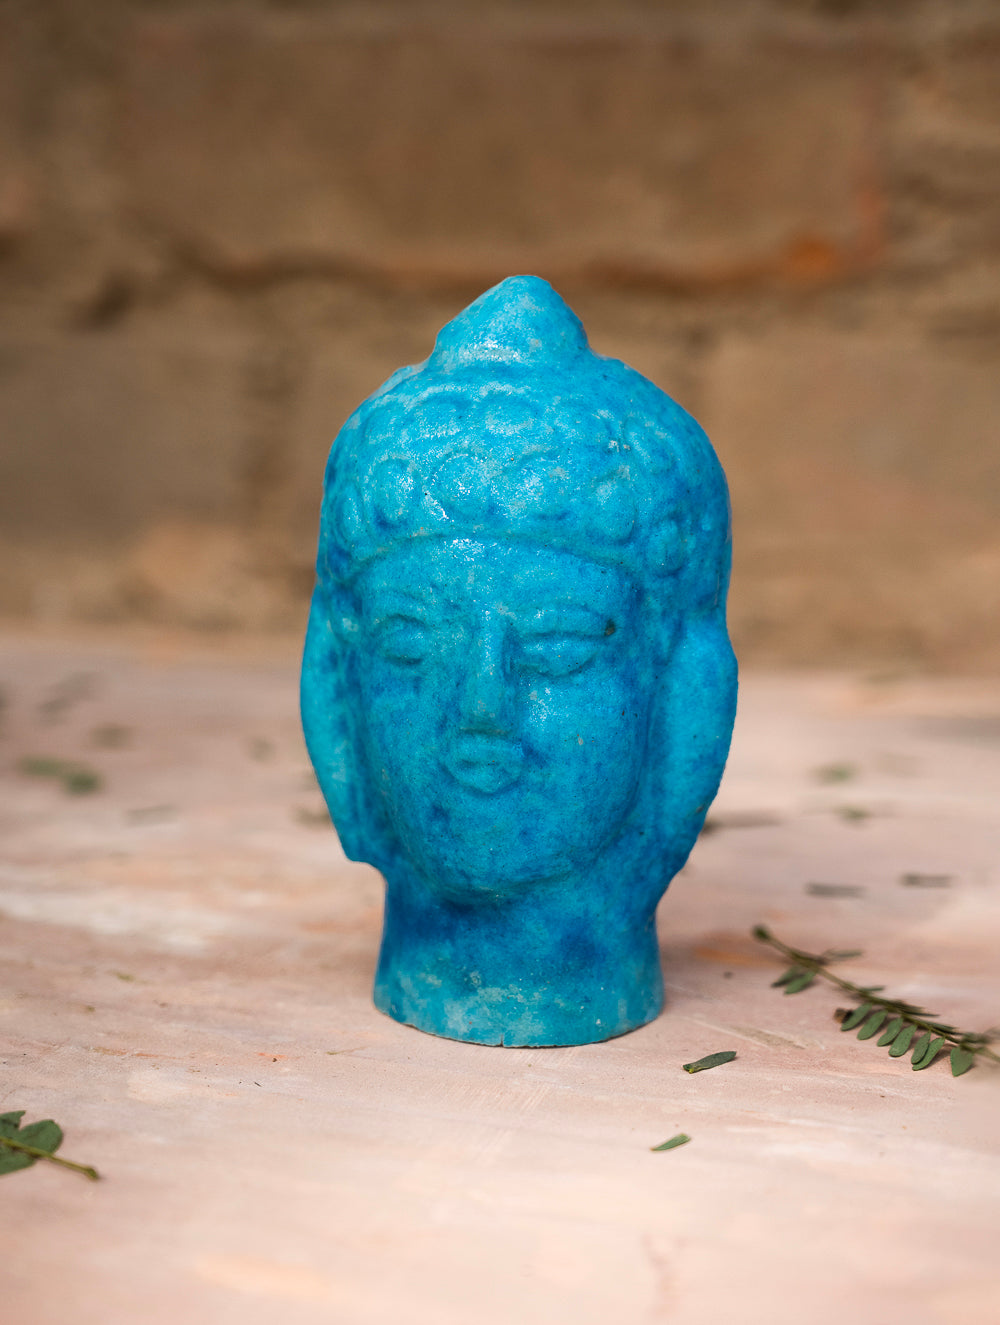 Load image into Gallery viewer, Delhi Blue Art Pottery Curio - Buddha Head